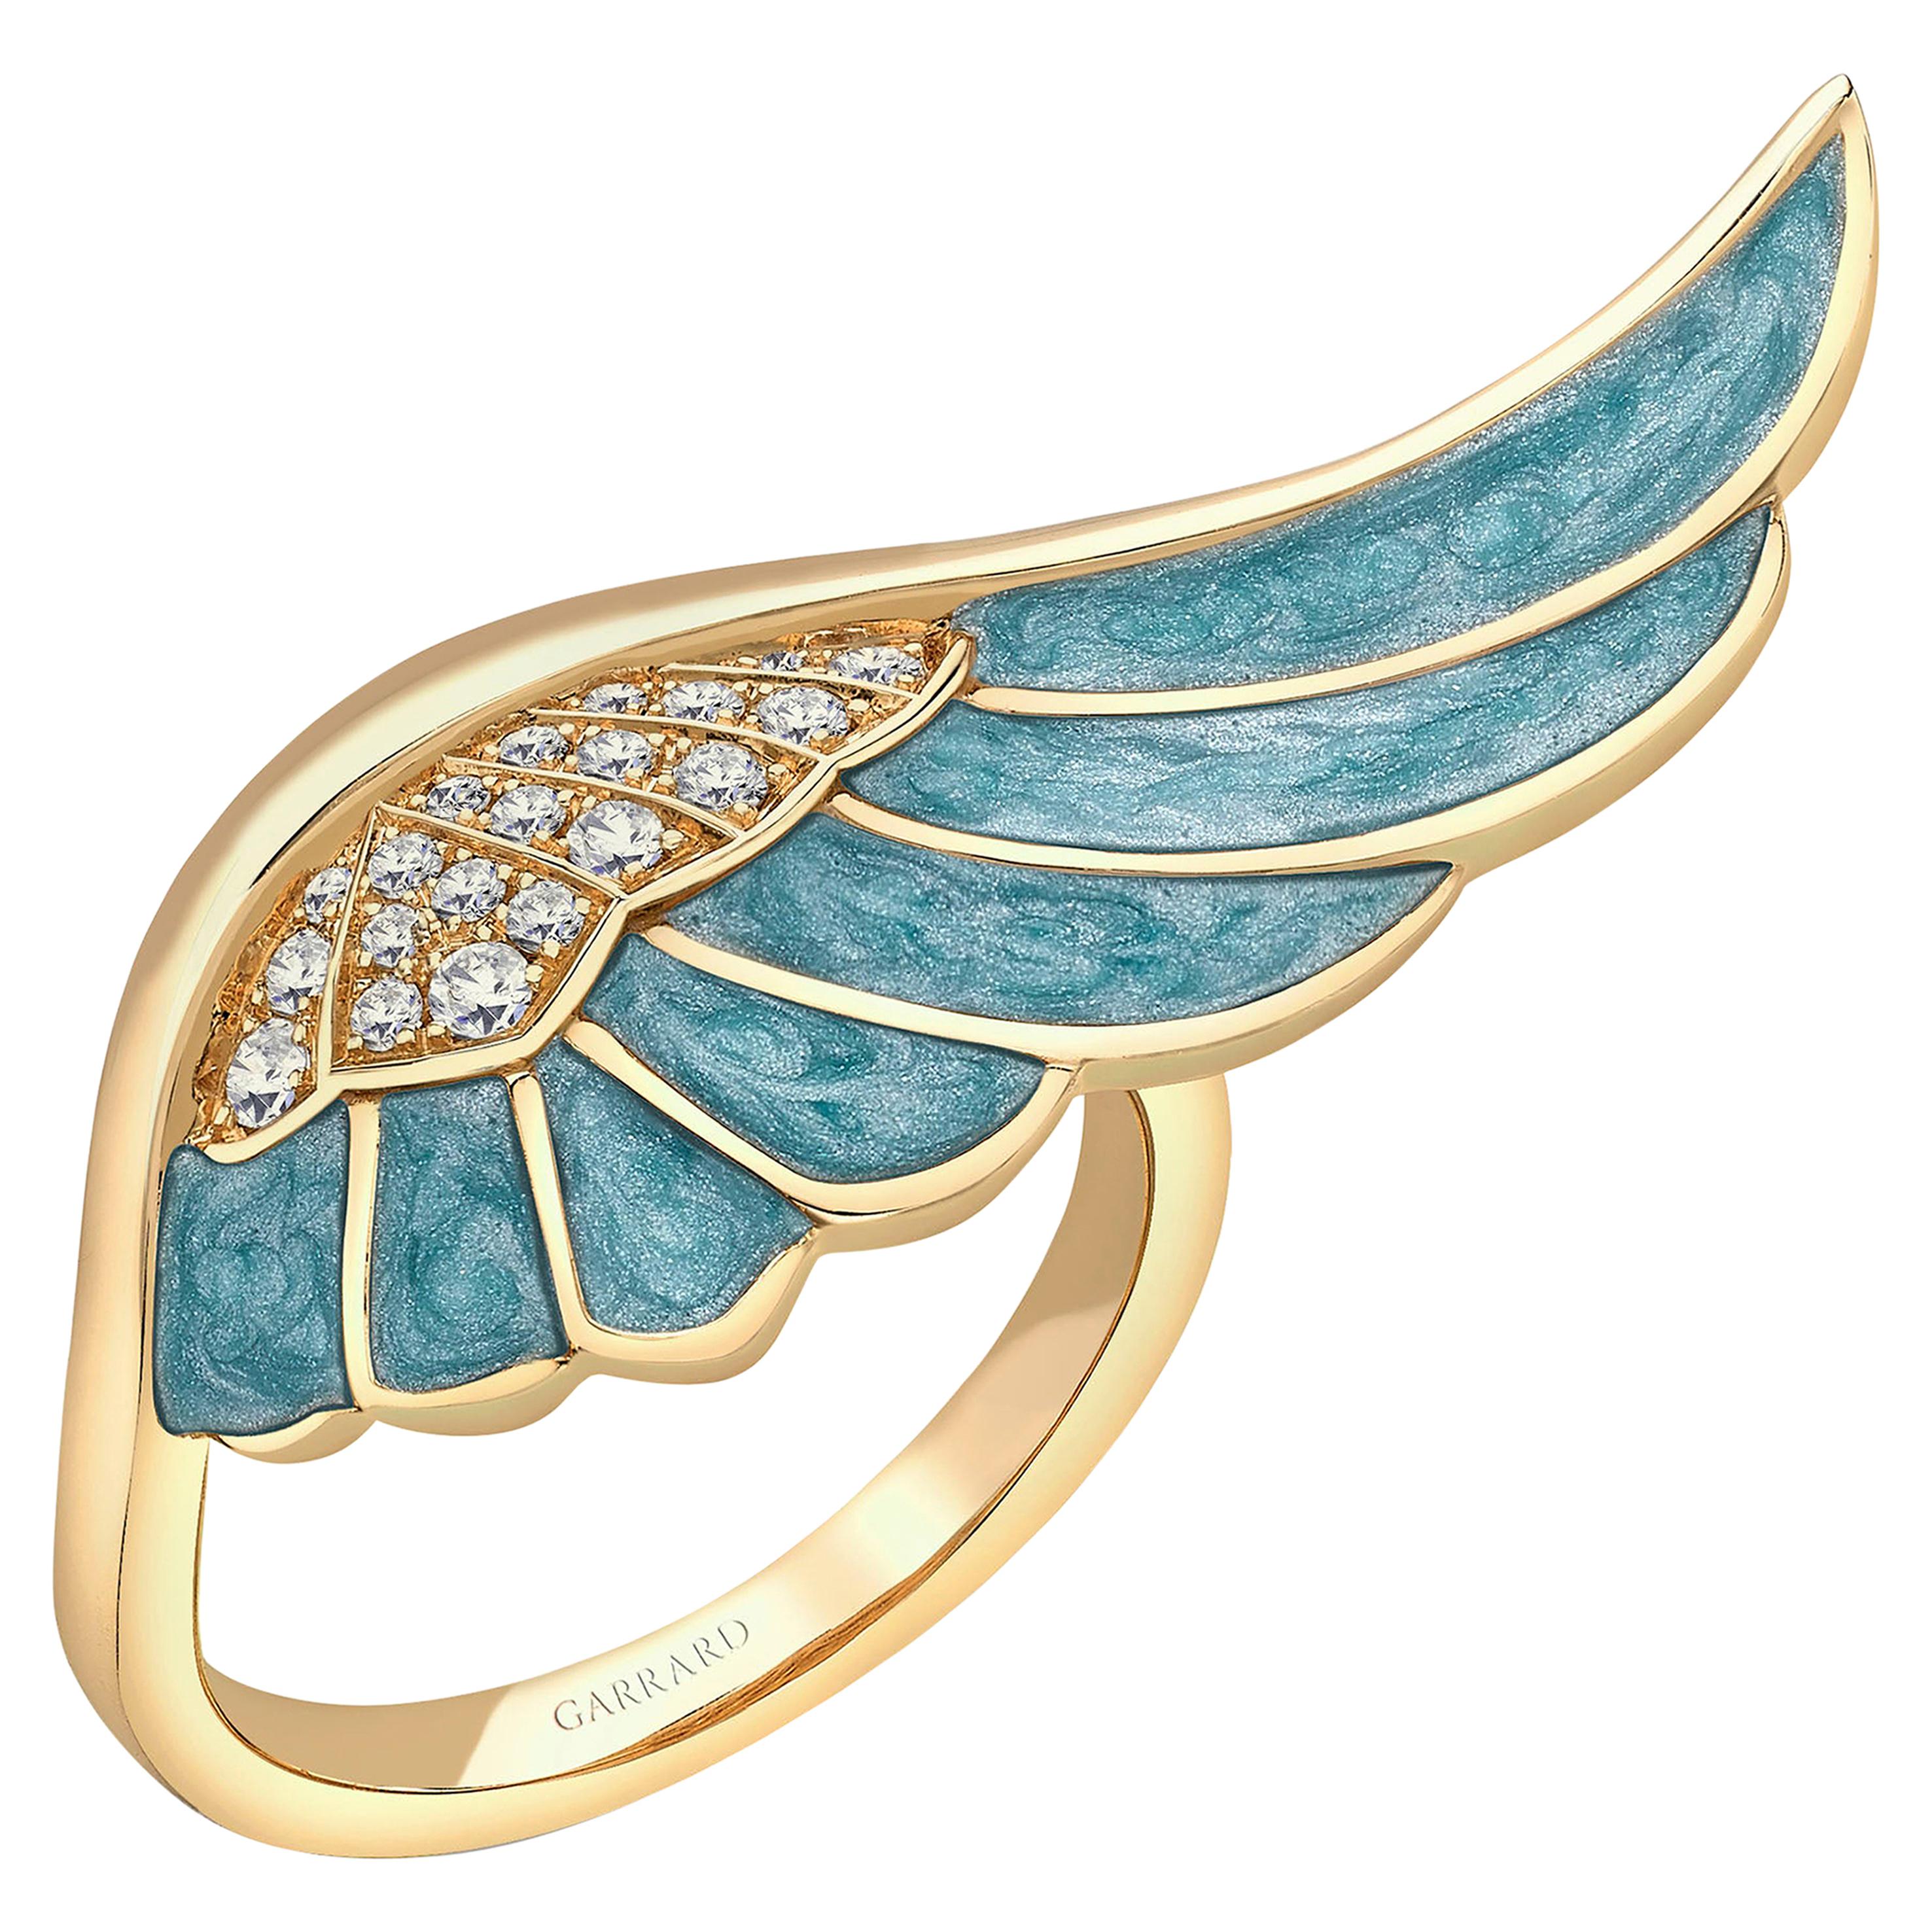 Garrard 'Wings Reflection' 18 Karat Yellow Gold White Diamond and Enamel Ring For Sale